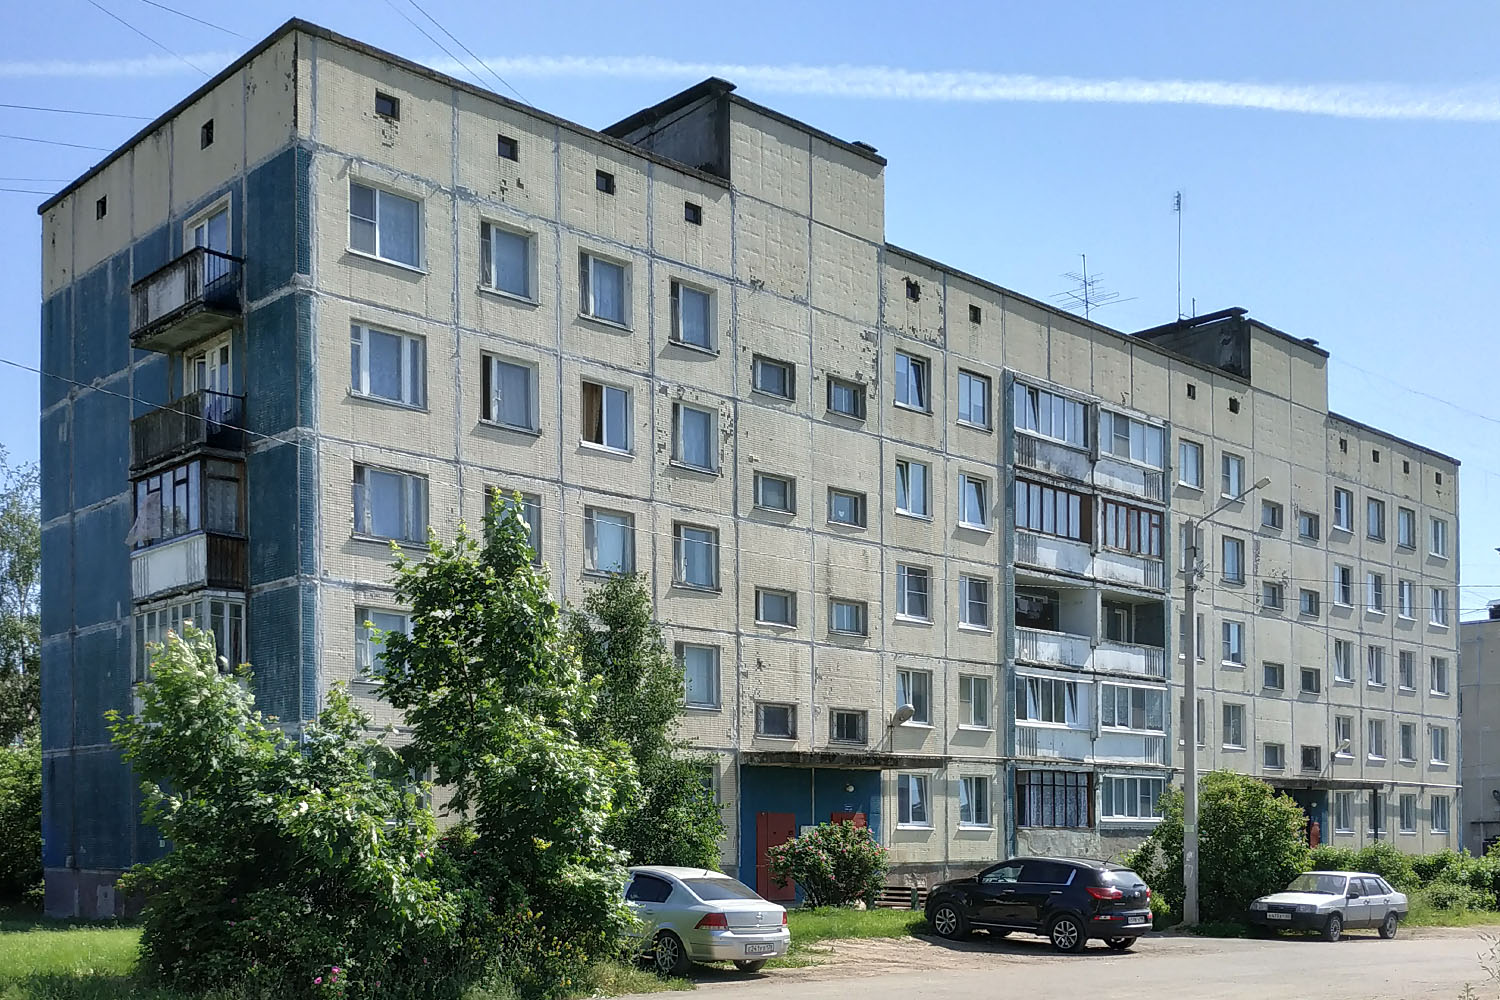 Lomonosov District, other localities, Русско-Высоцкое, 19